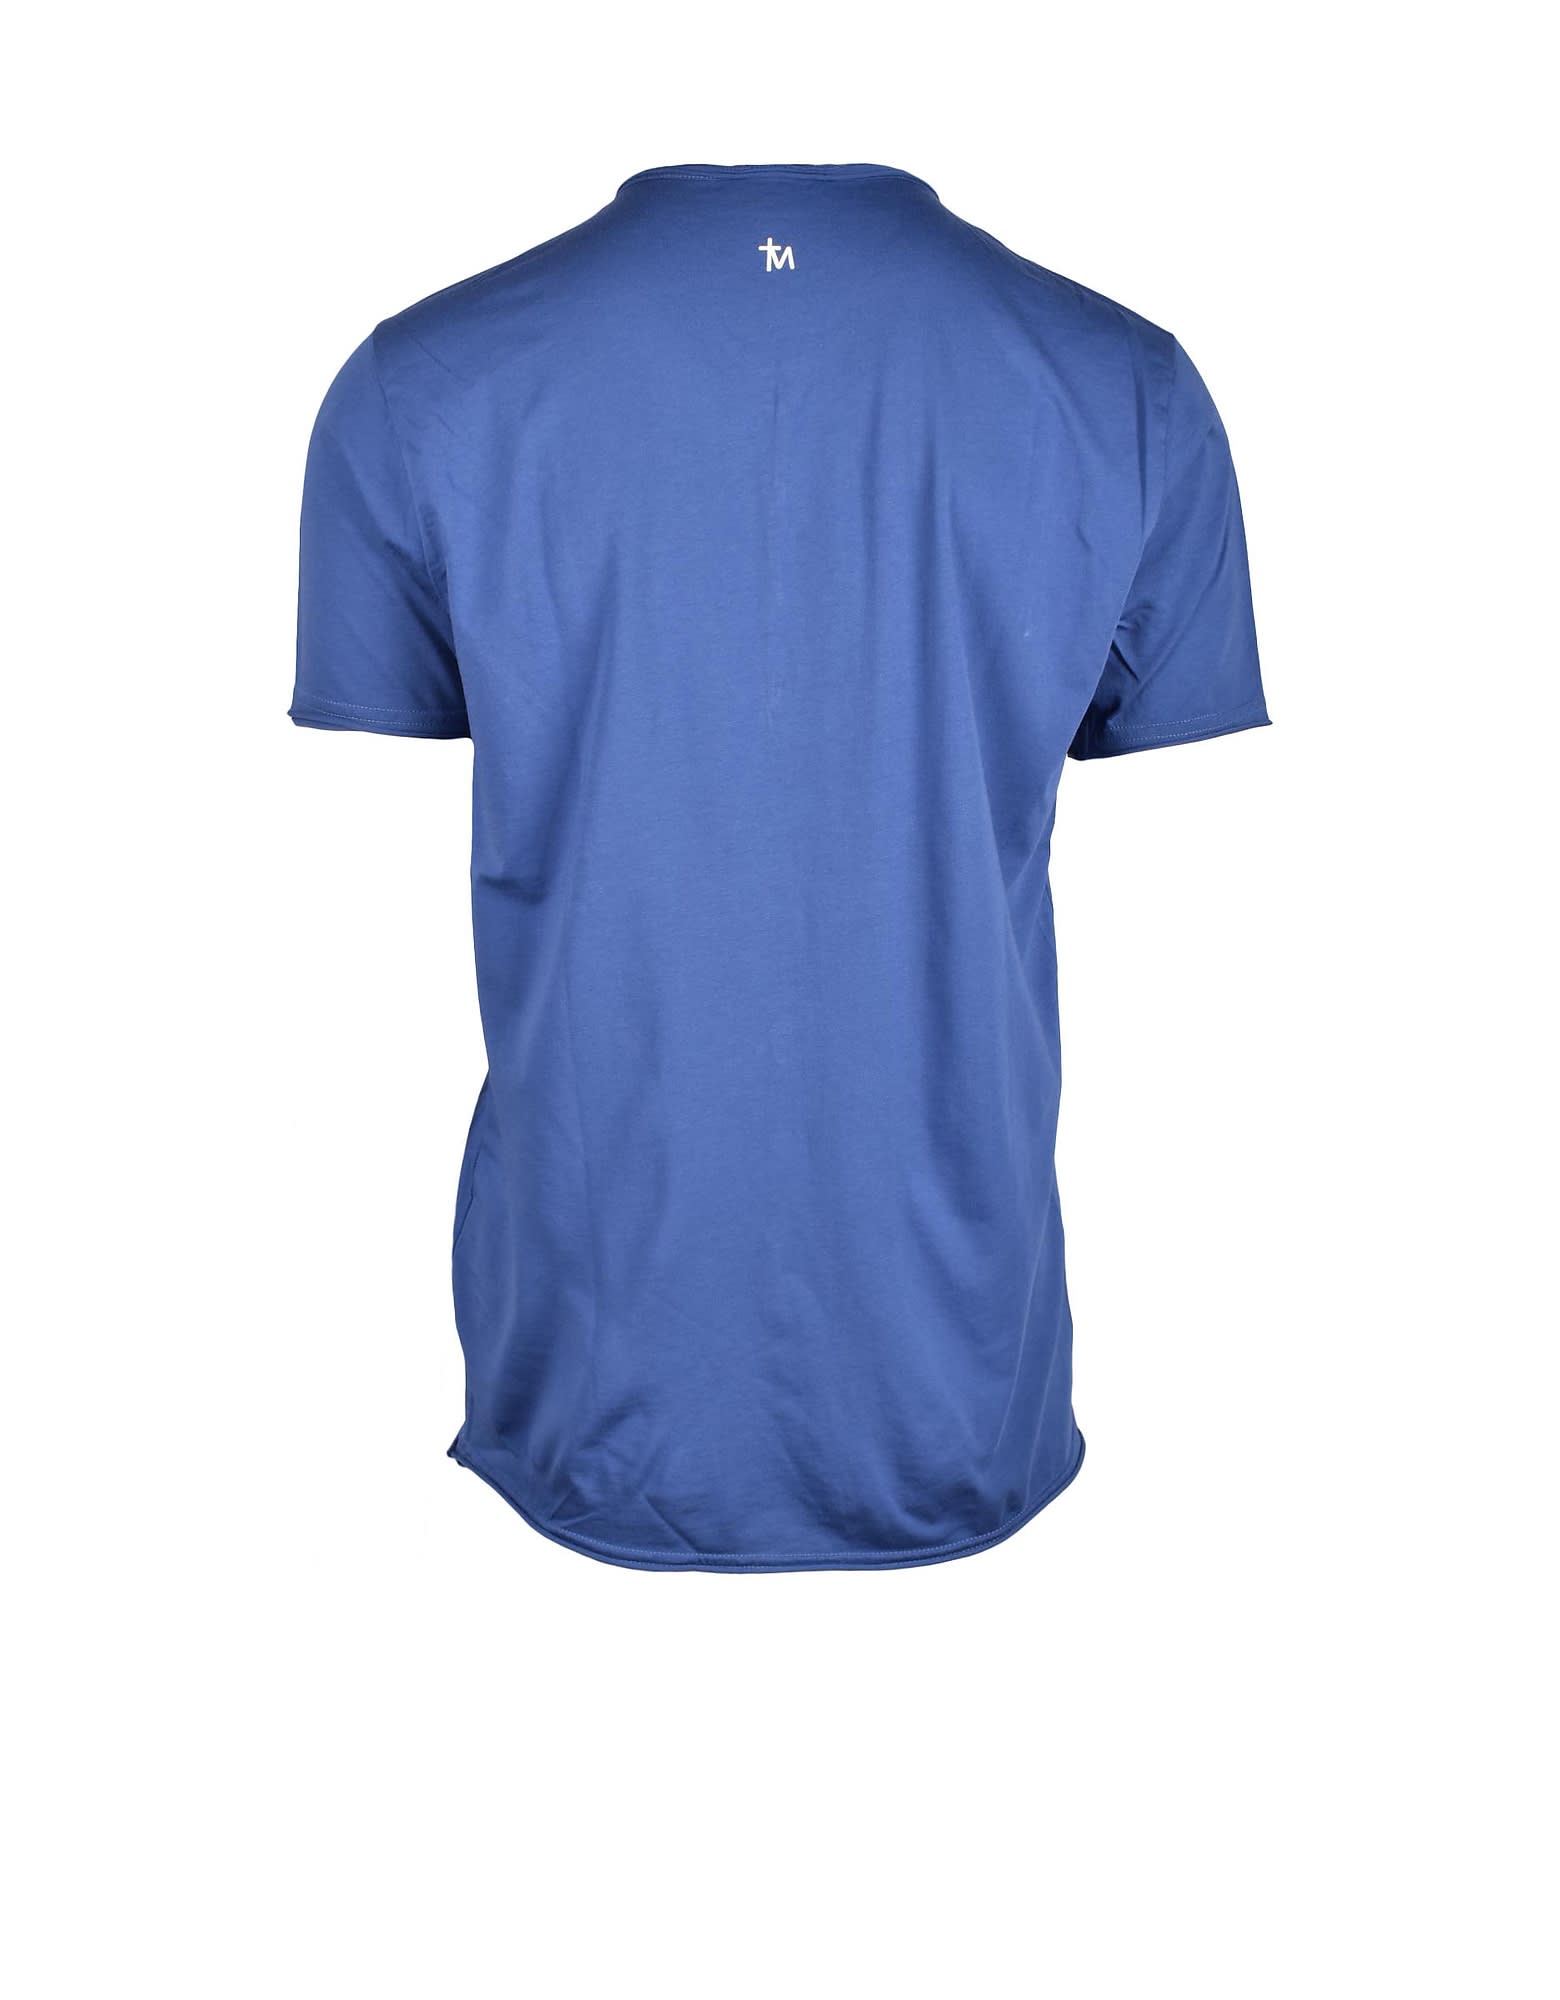 Mens Blue T-shirt